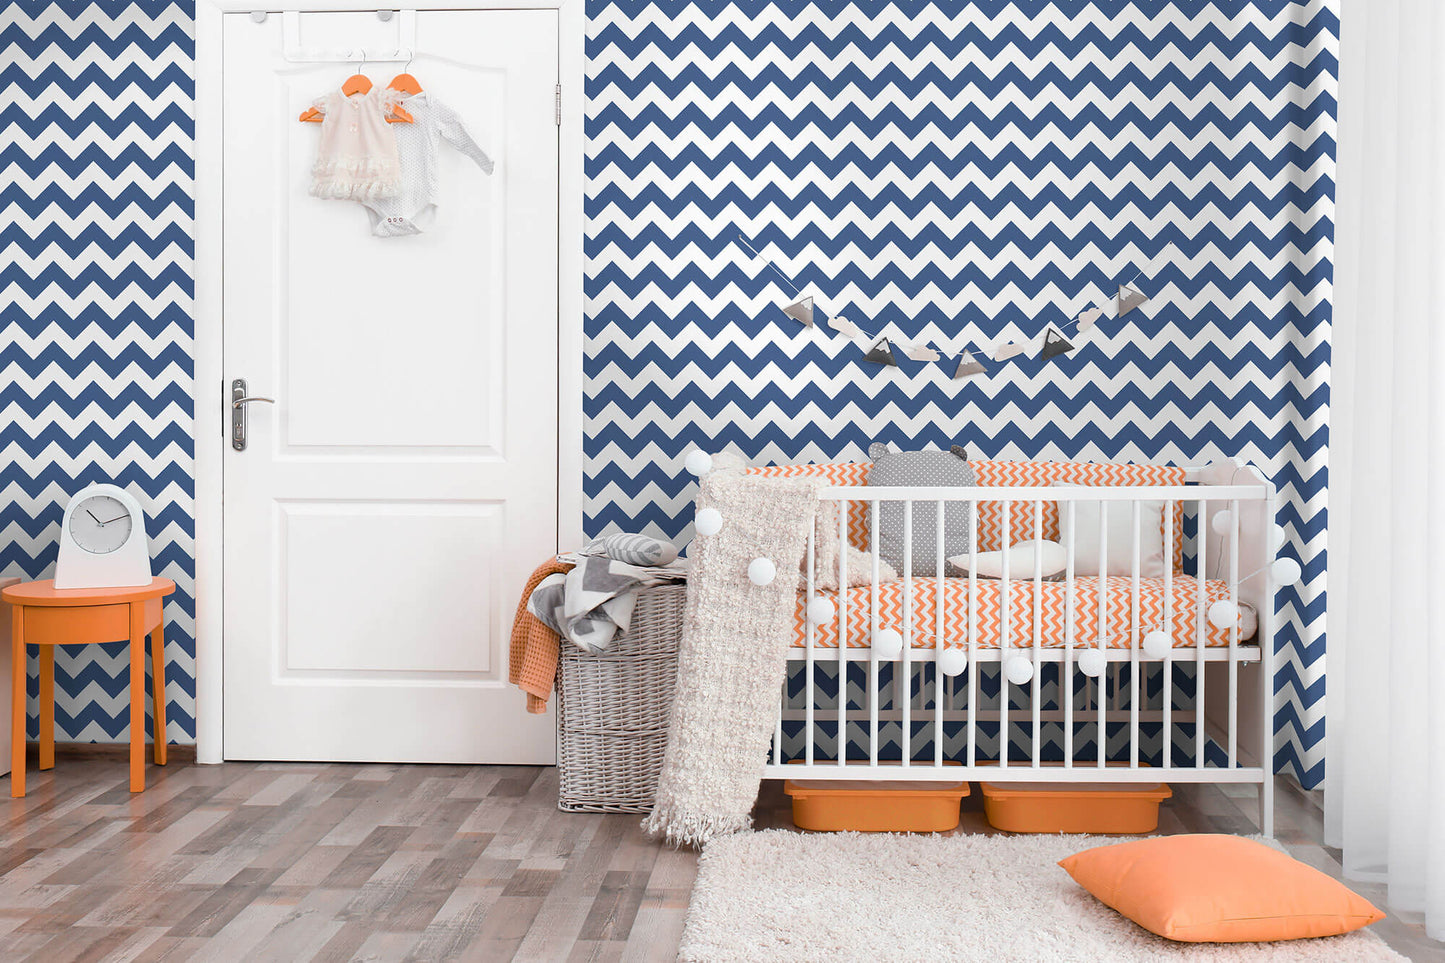 KI0589 Baby Nursery Chevron Sidewall Wallpaper Navy